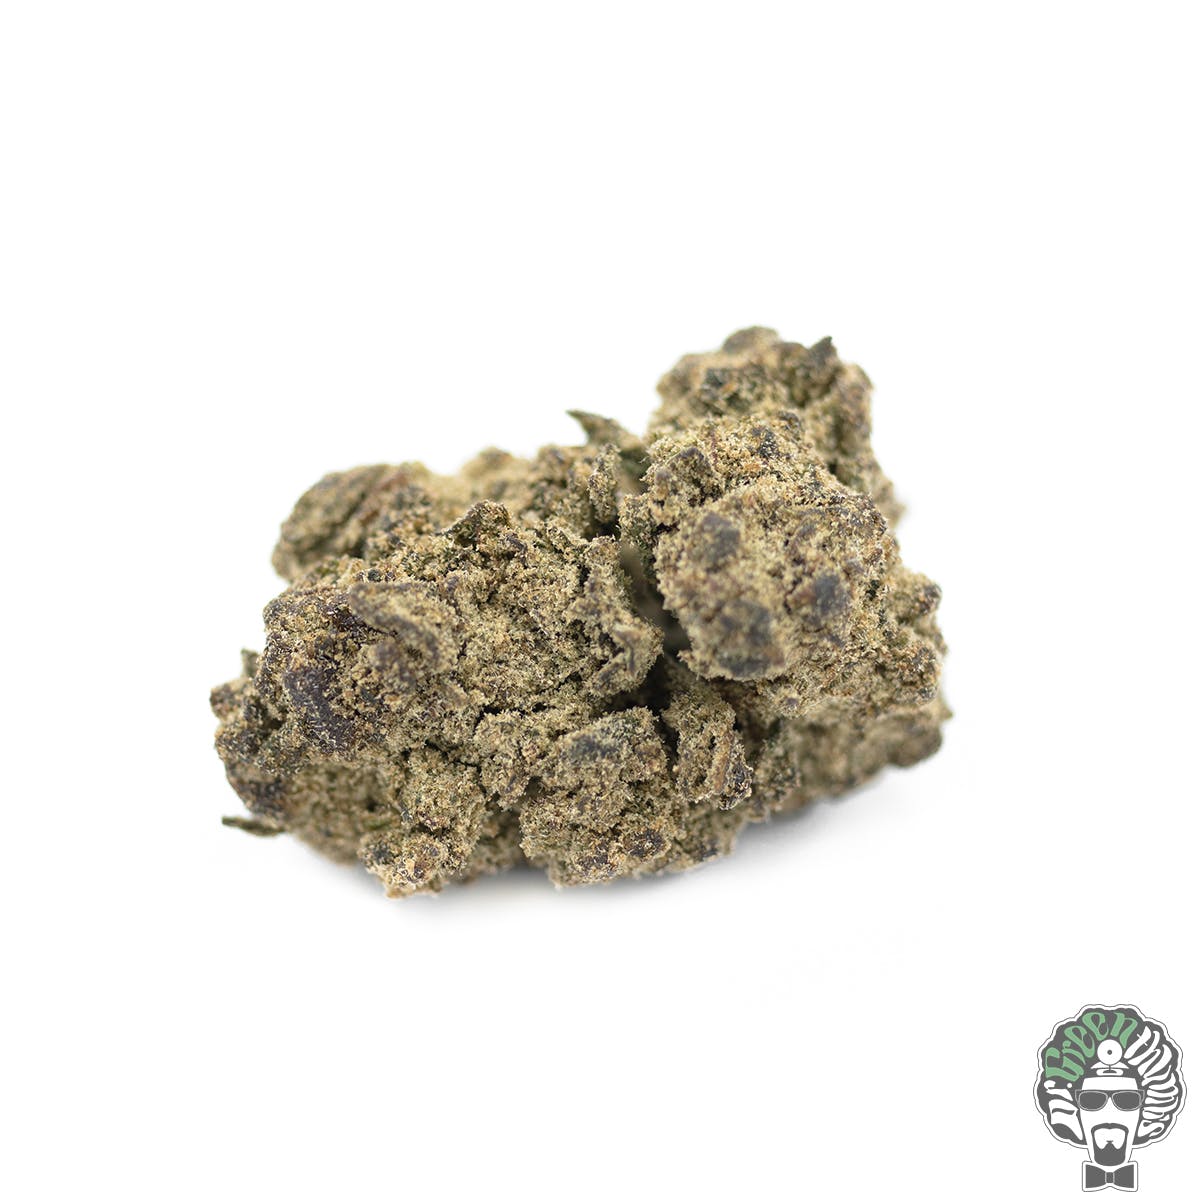 Original Moonrock Cannabis By Caviar Gold